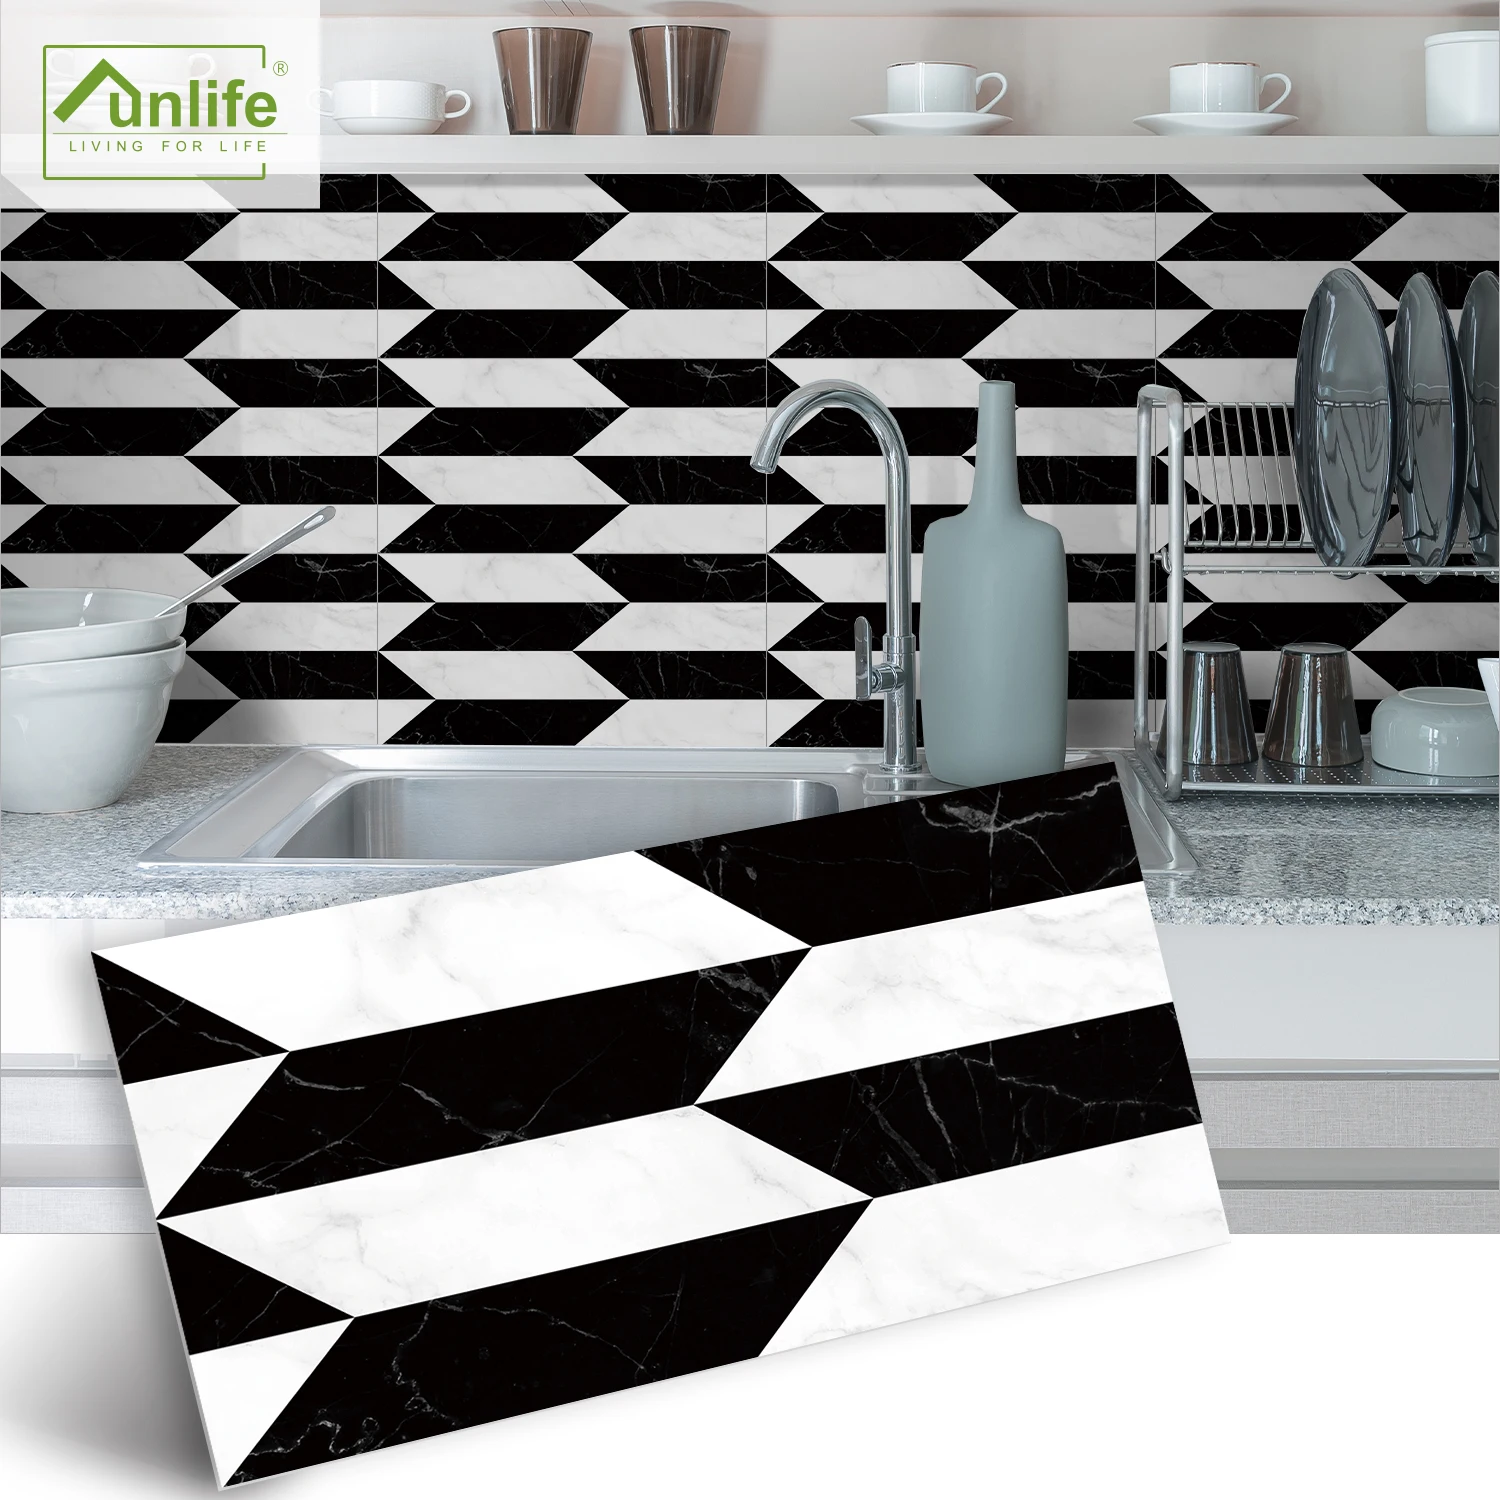 

Funlife® 30x15cm Black & White Geometry Self-Adhesive Thick Wall Stickers Tile Sticker Fireplace Waterproof Kitchen Backsplash